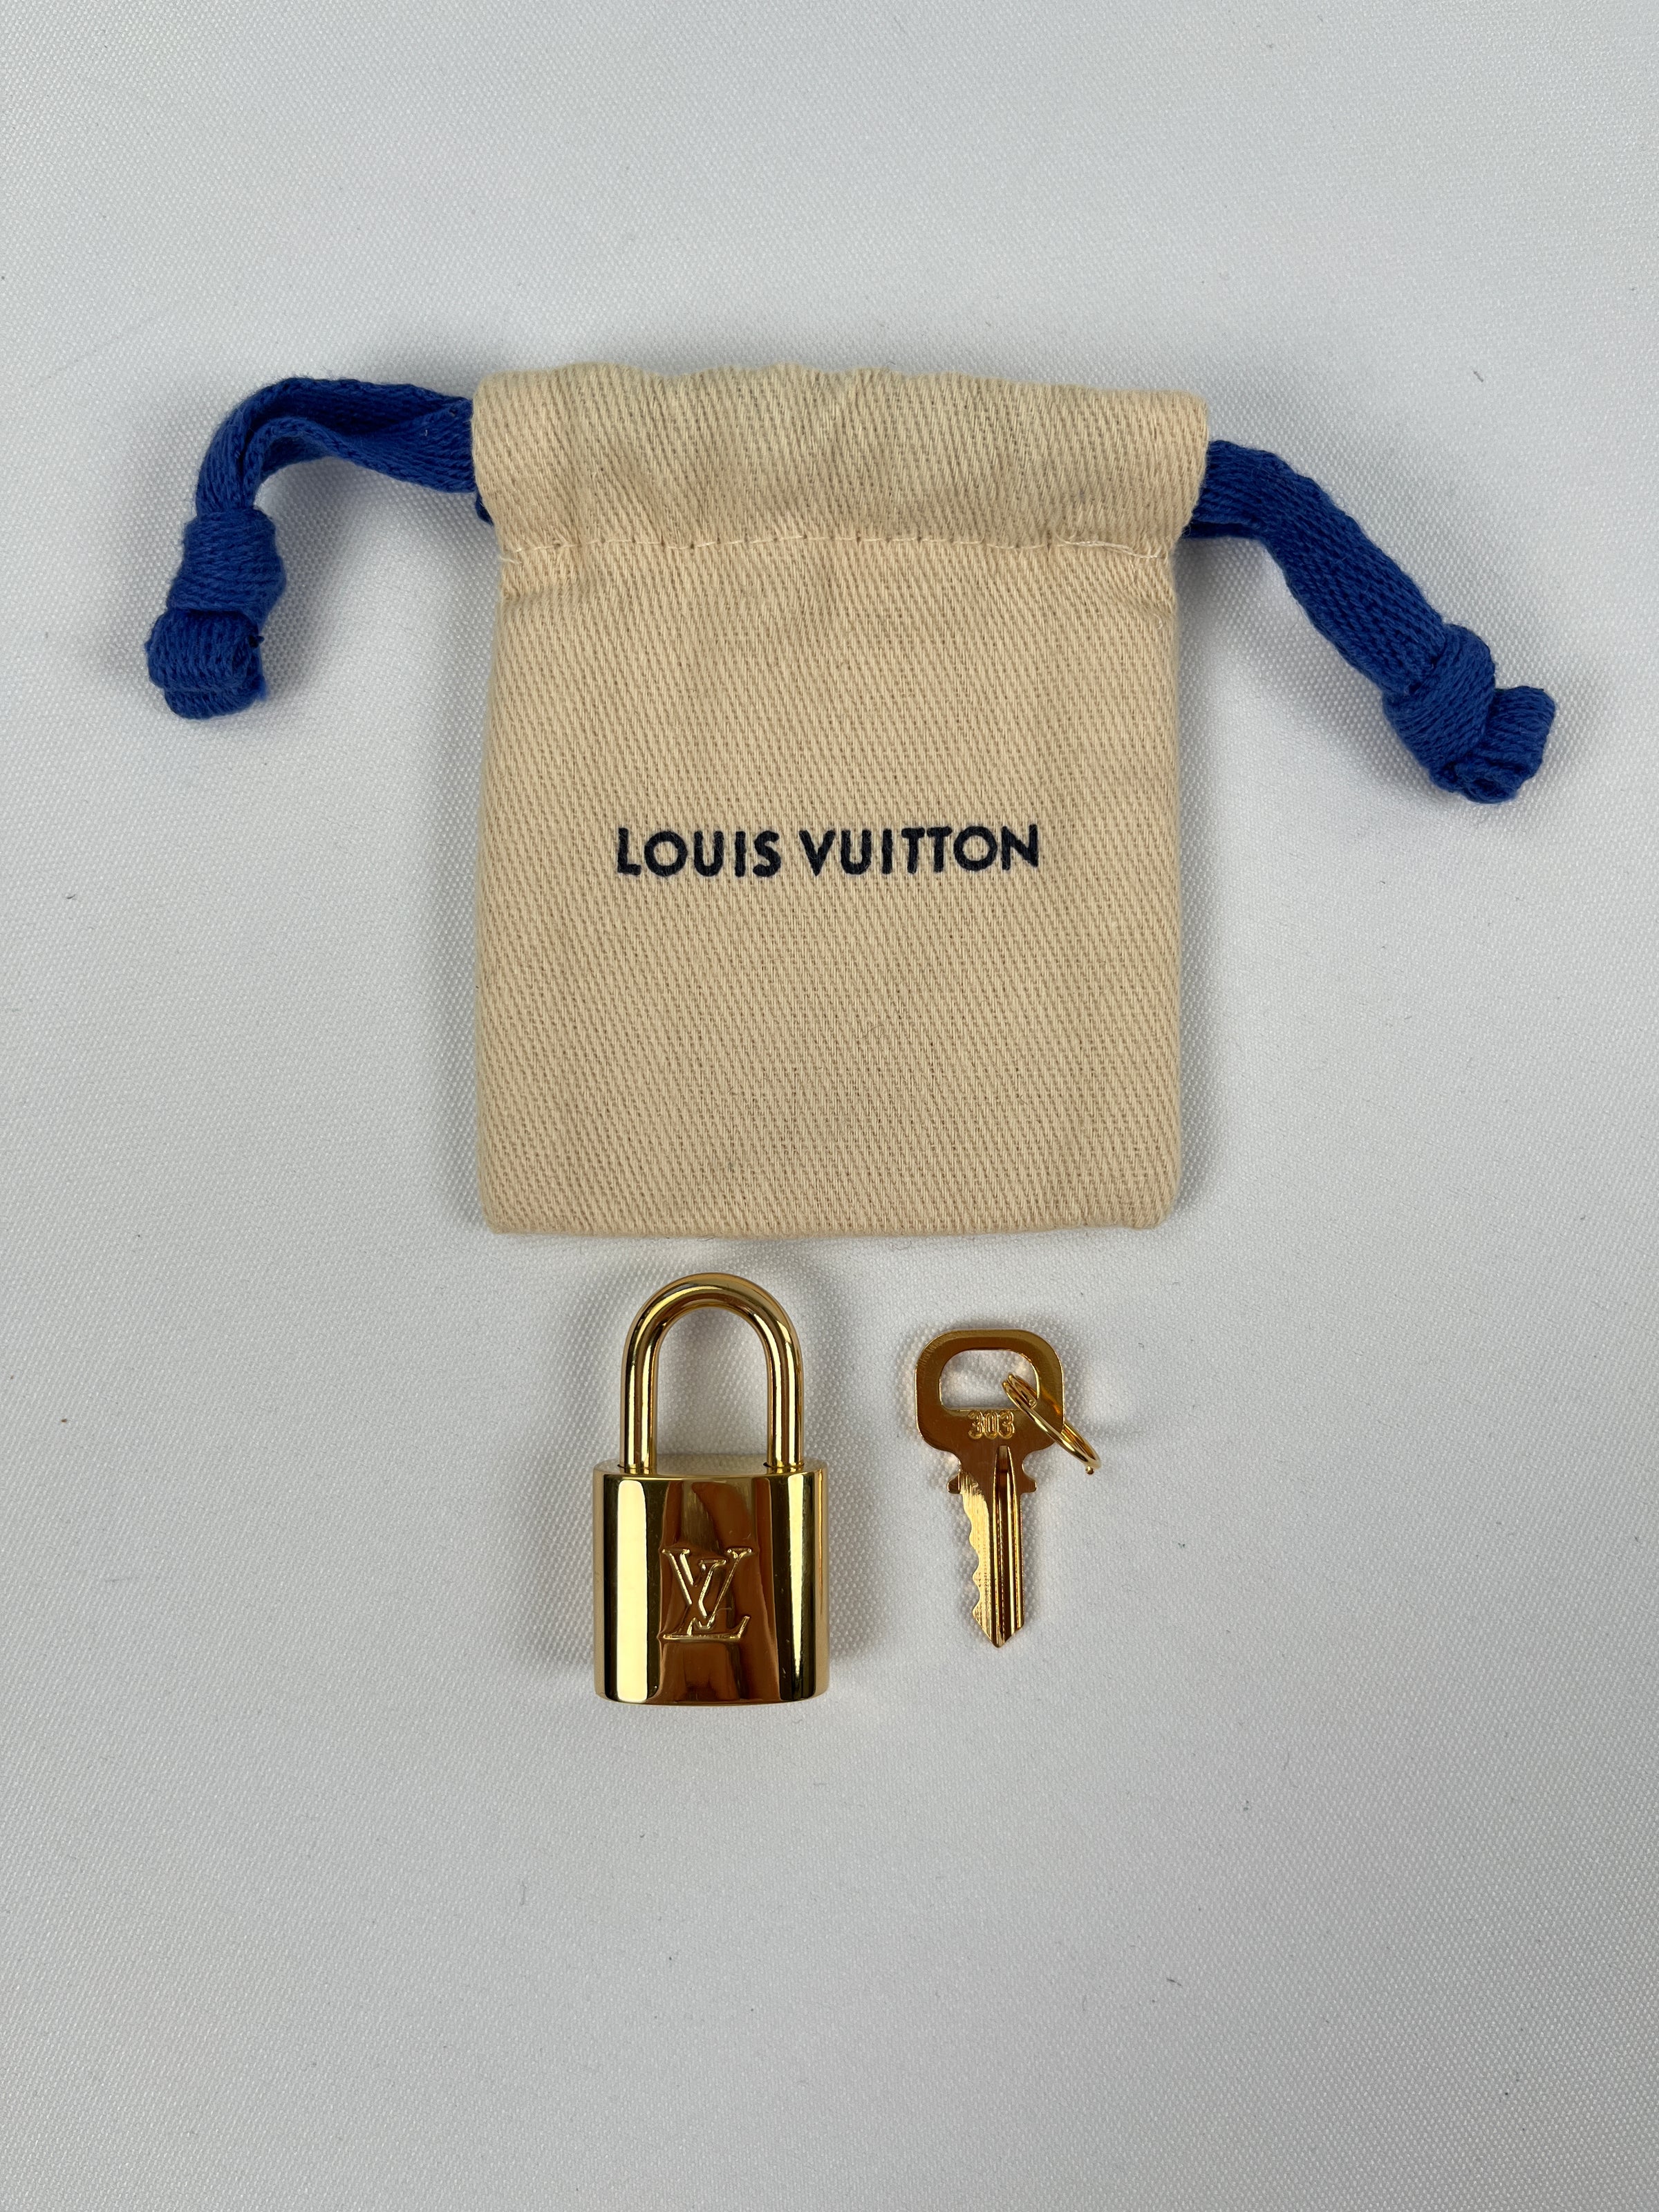 Louis Vuitton Padlock and Key # 303